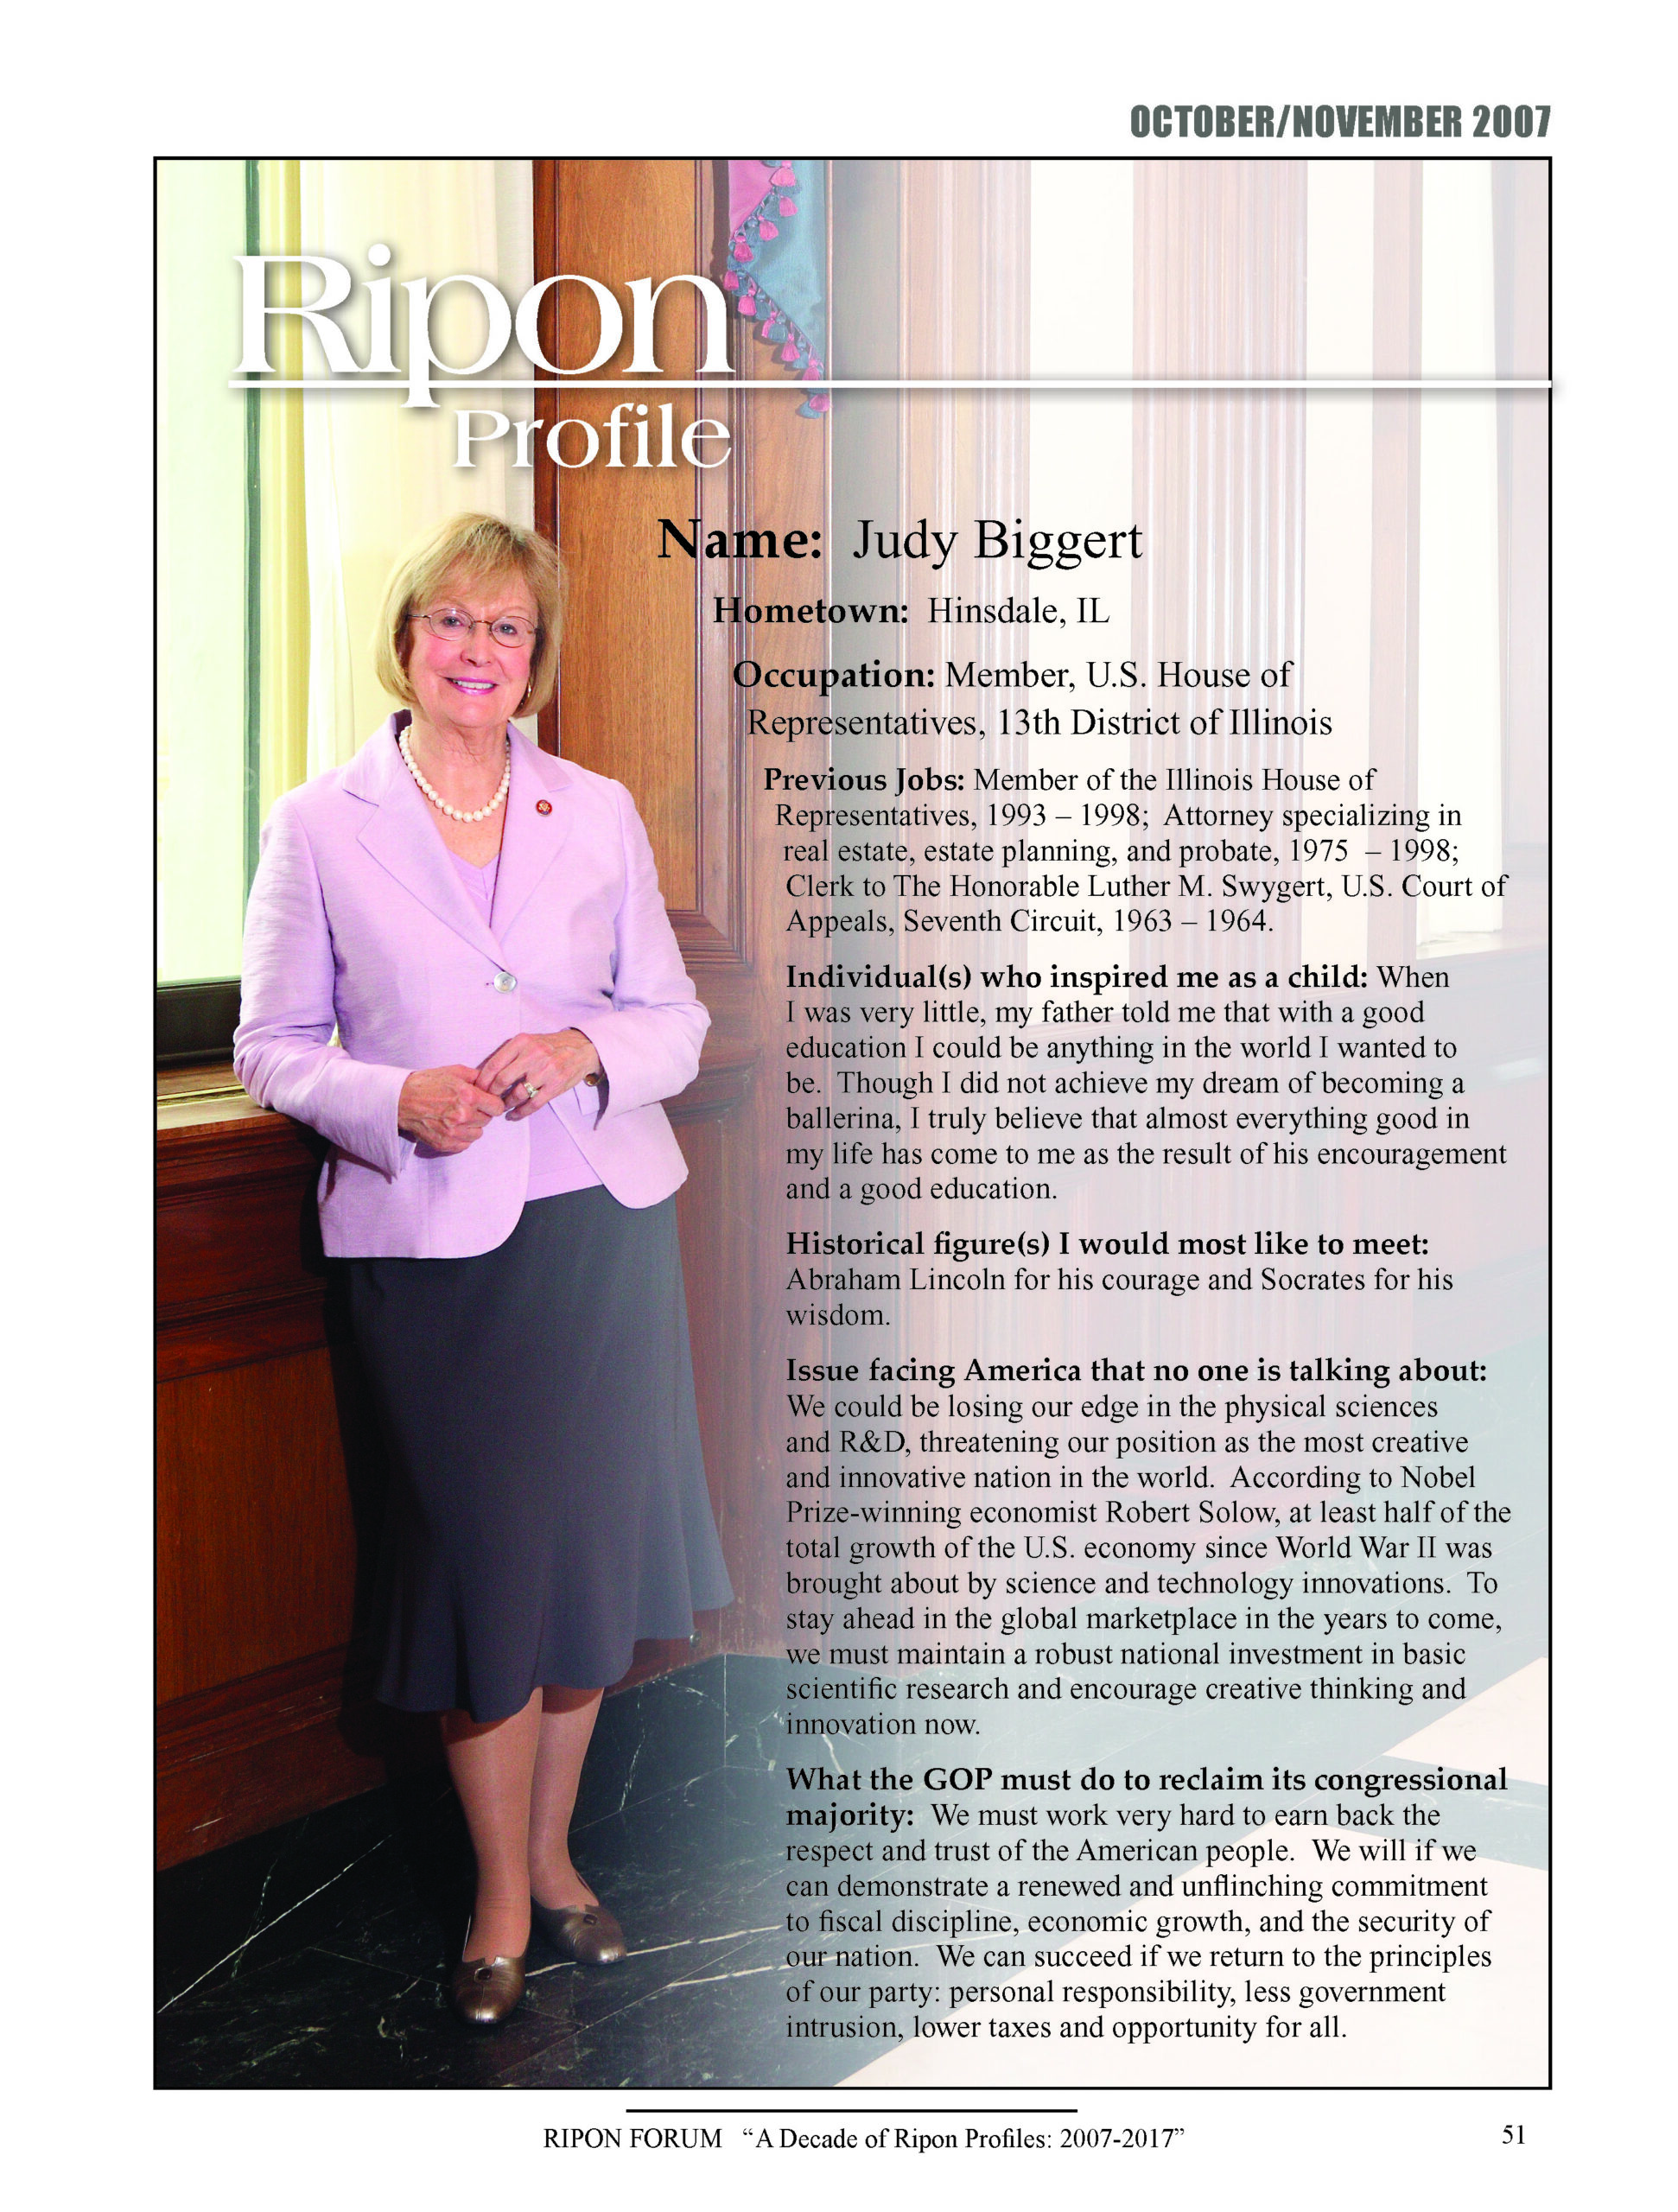 Ripon Profile of Judy Biggert